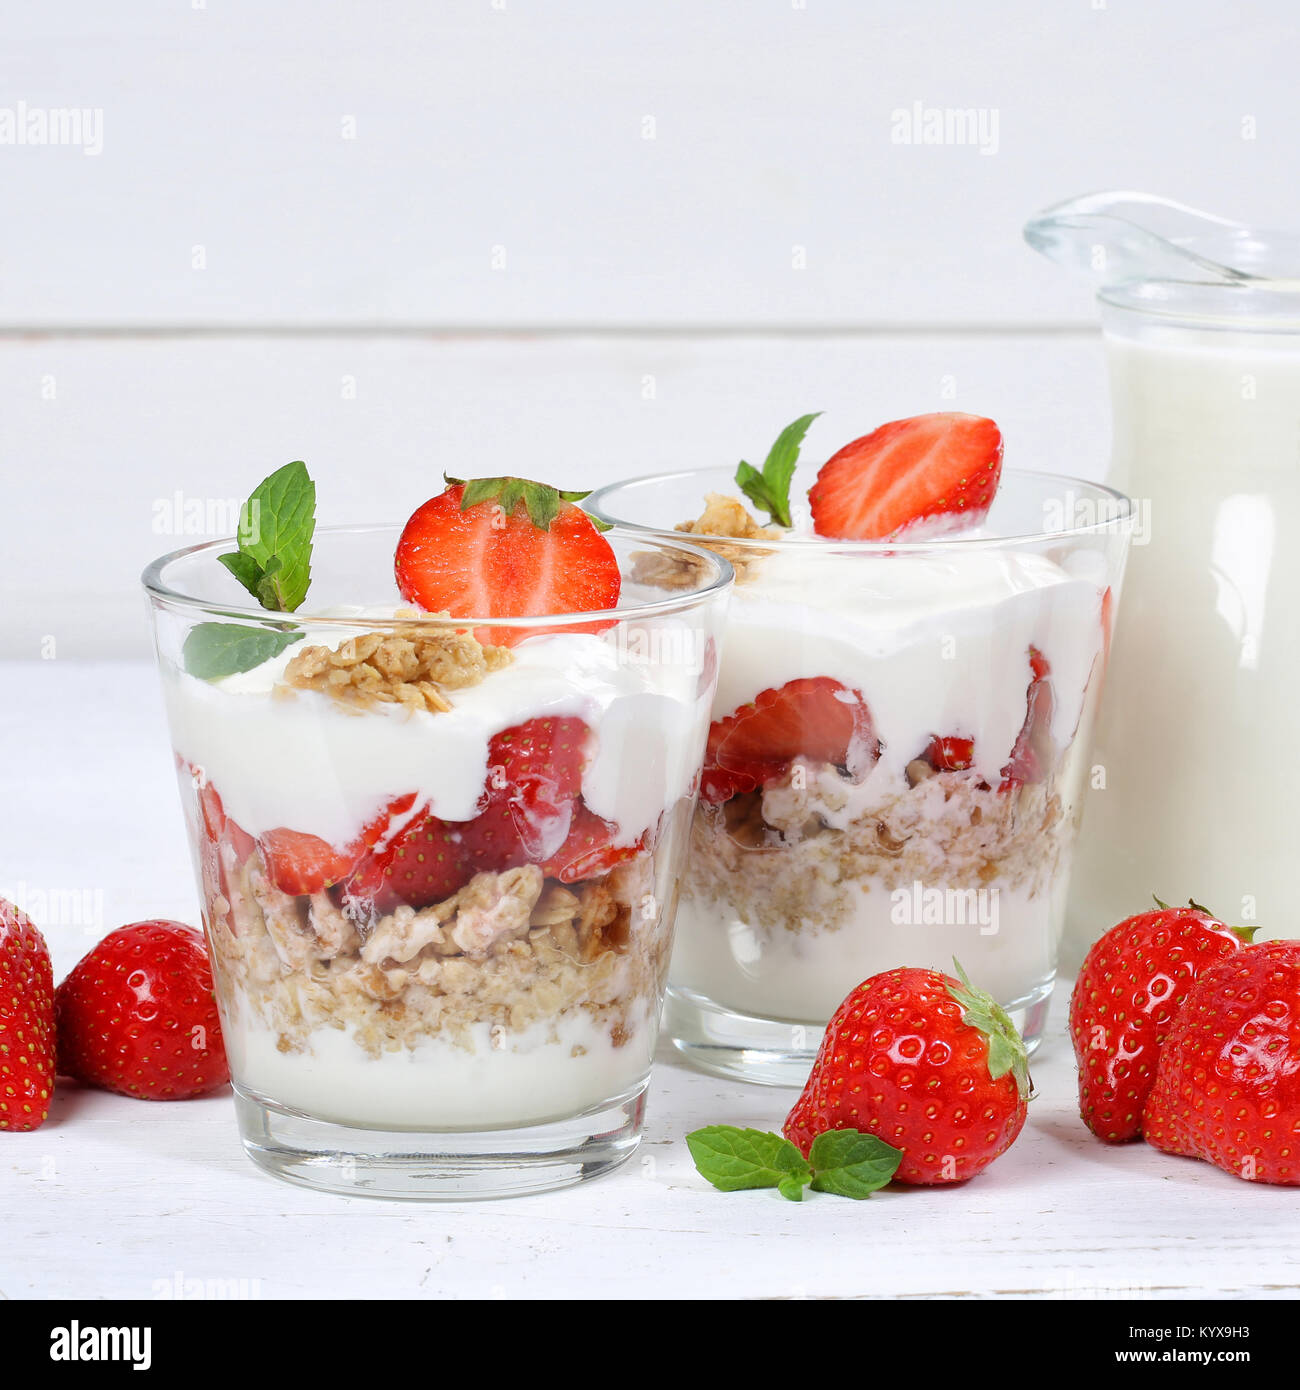 Strawberry yogurt yoghurt strawberries fruits square breakfast food Stock Photo